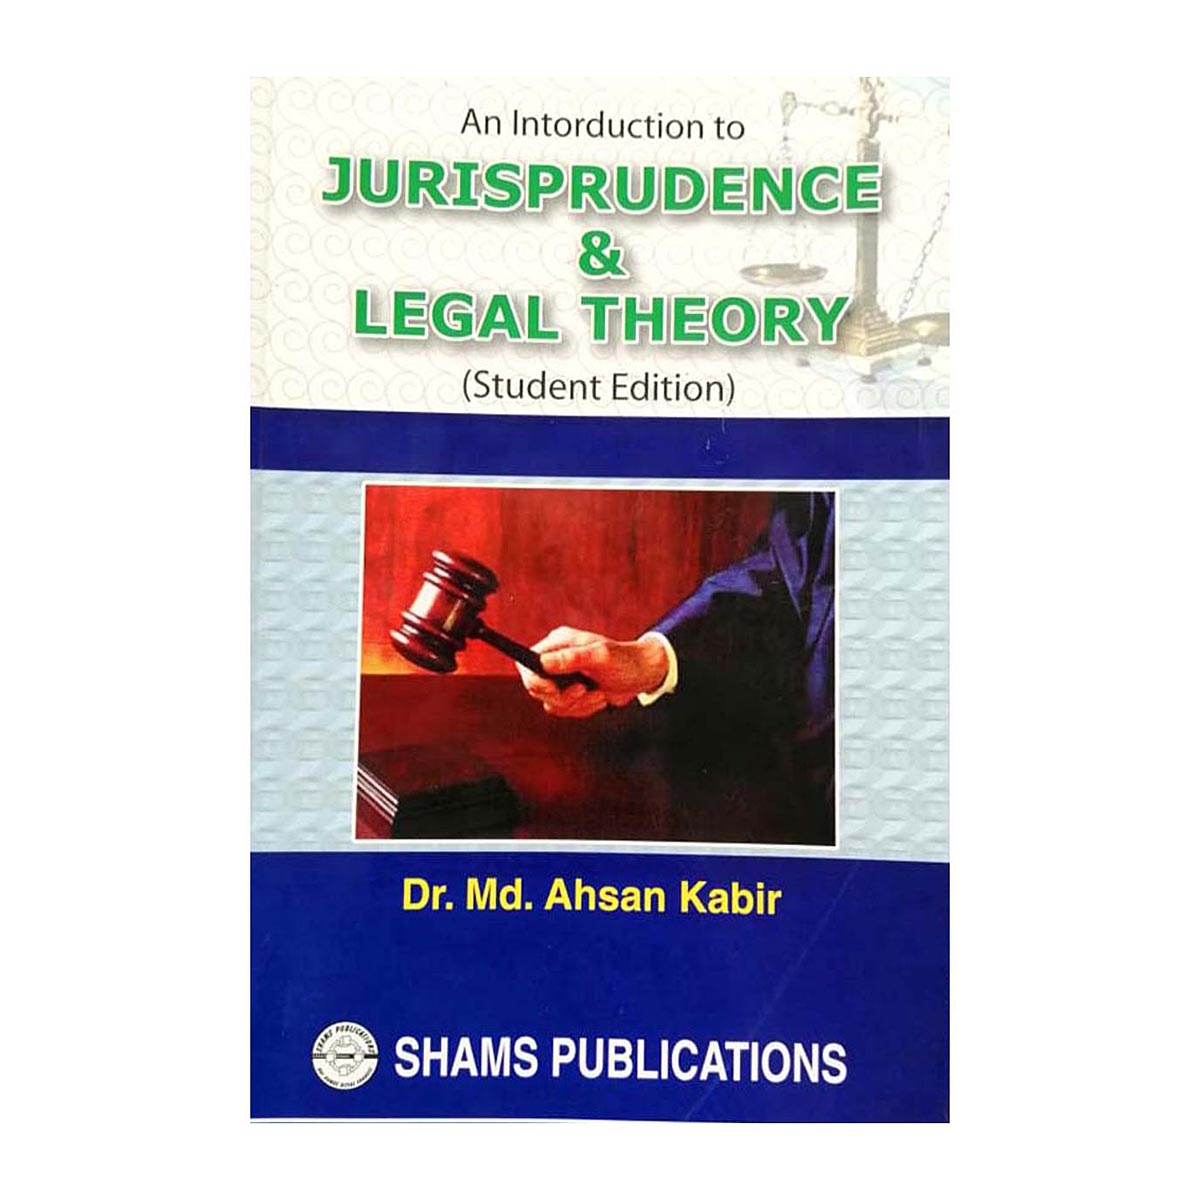 Jurisprudence & Legal Theory by Dr. Md. Ahsan Kabir